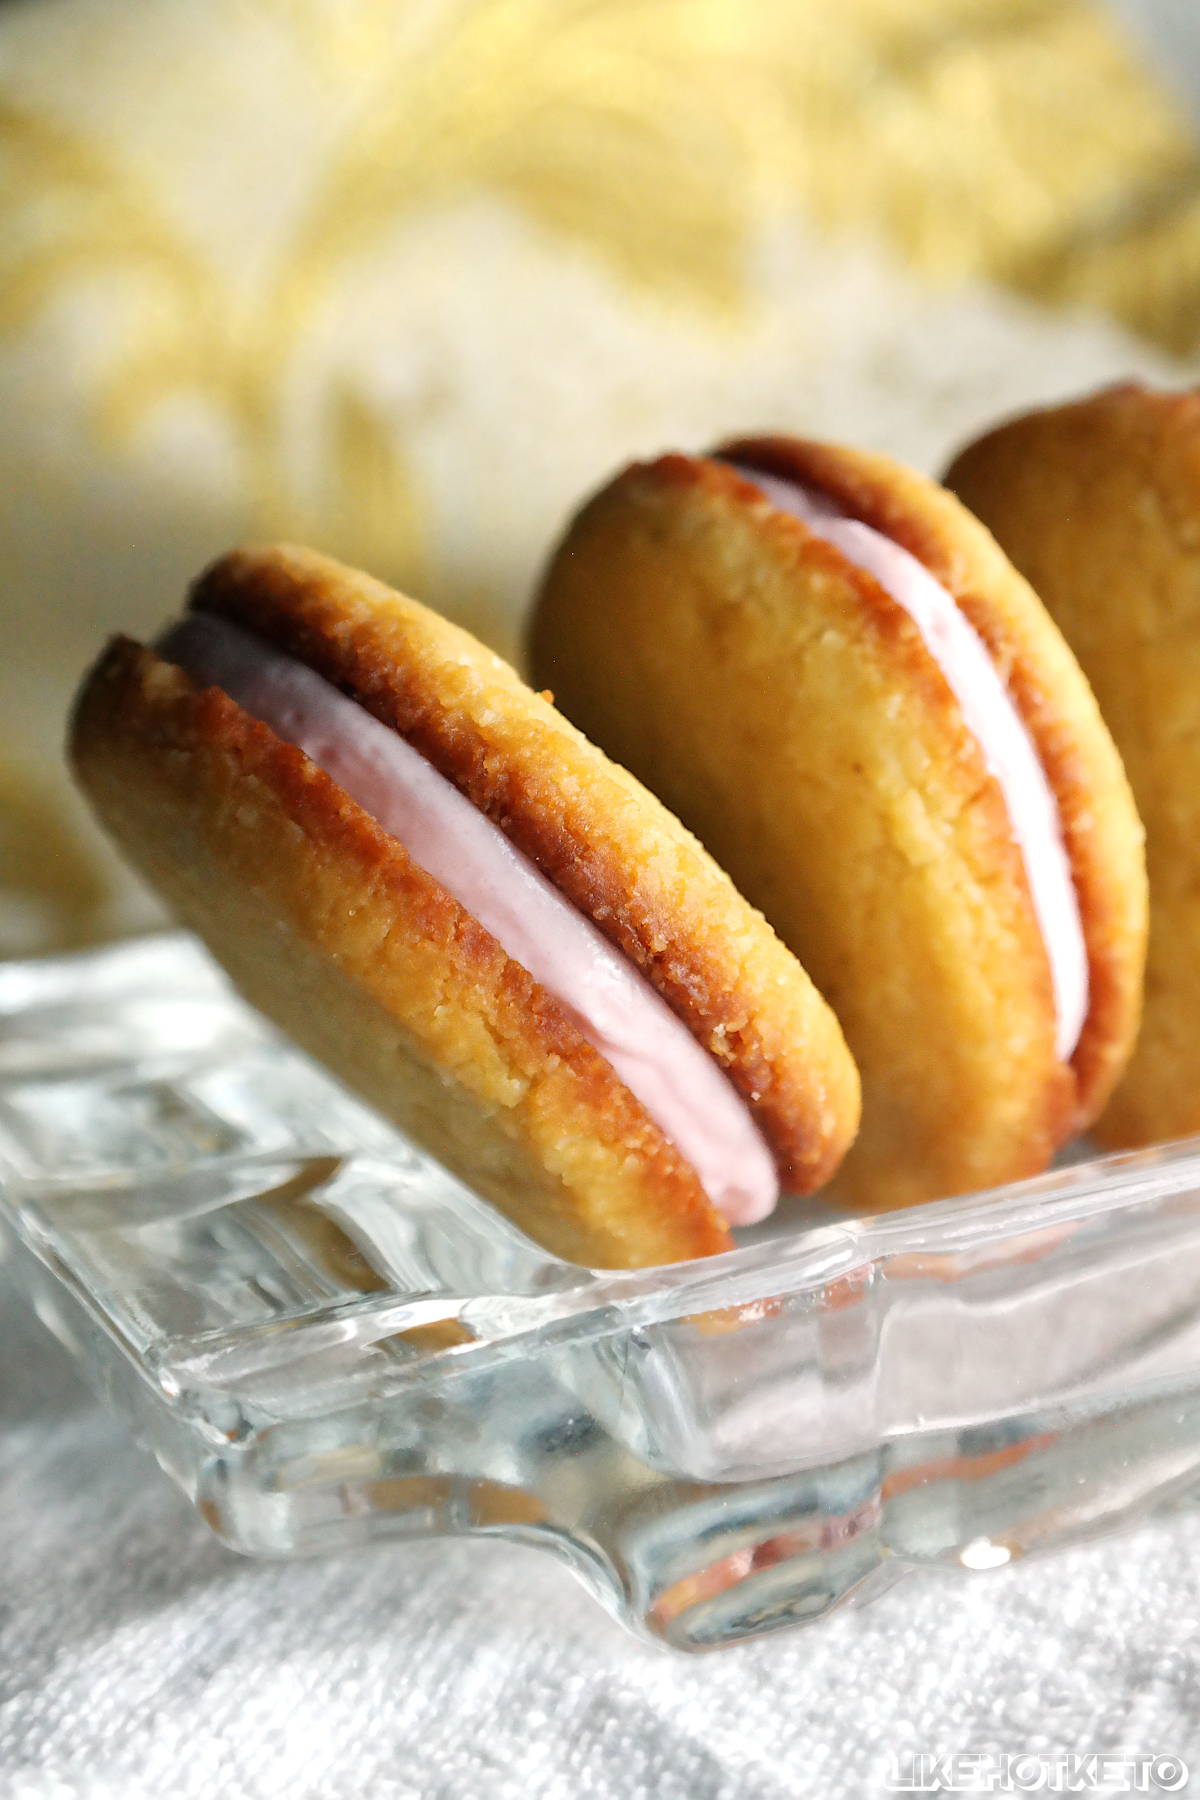 Gluetn-free strawberry cream sandwich cookies, on a crystal tray.